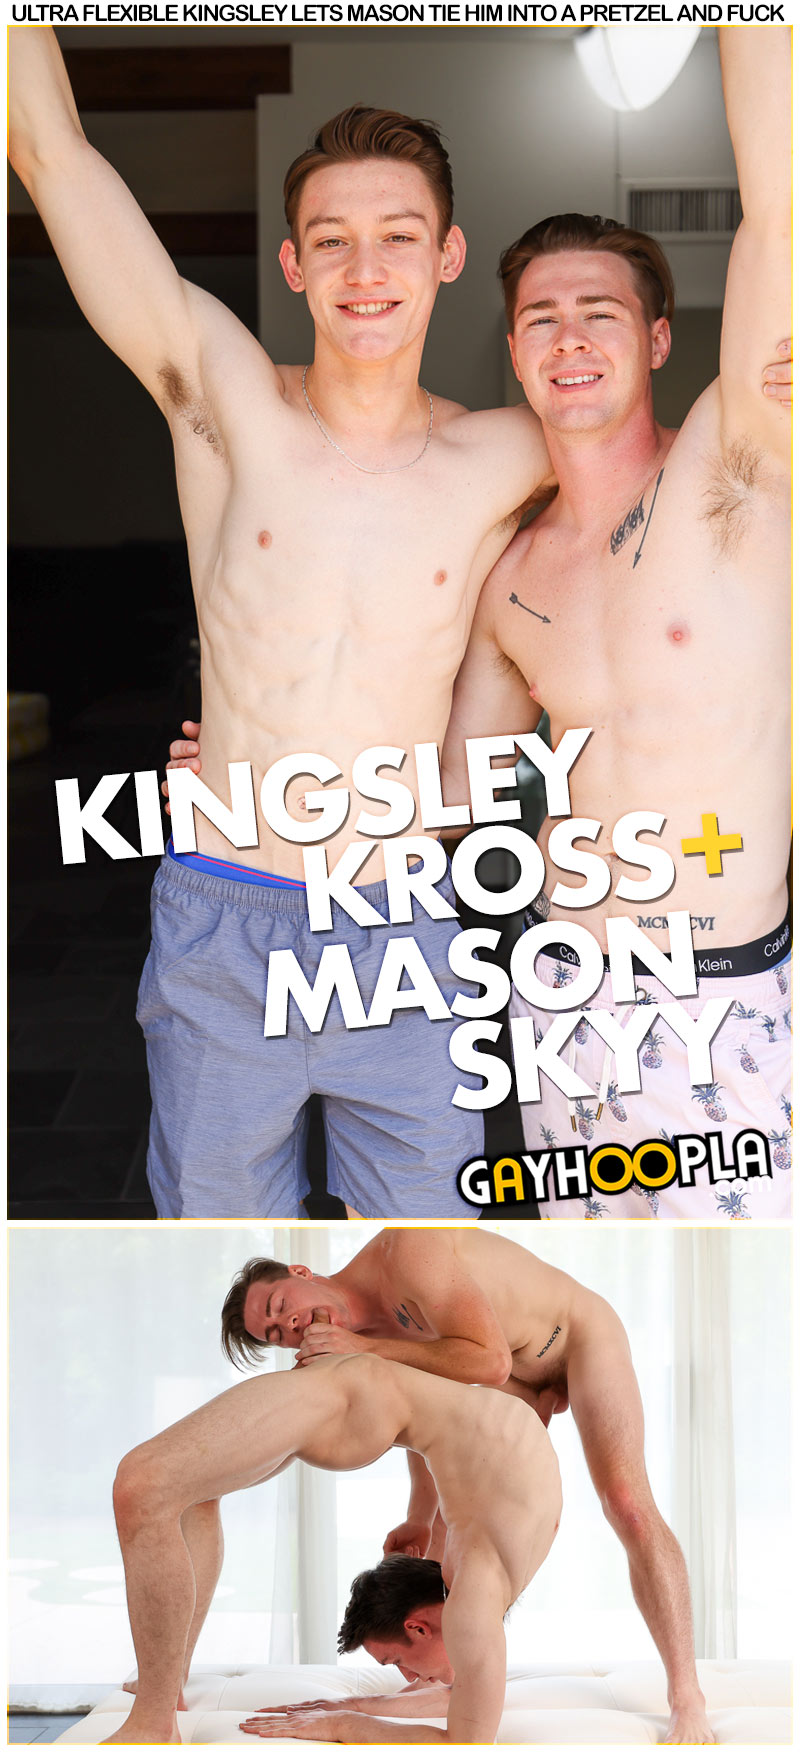 Mason Skyy Ties Kingsley Kross Into a Pretzel and FUCKS Him at GayHoopla